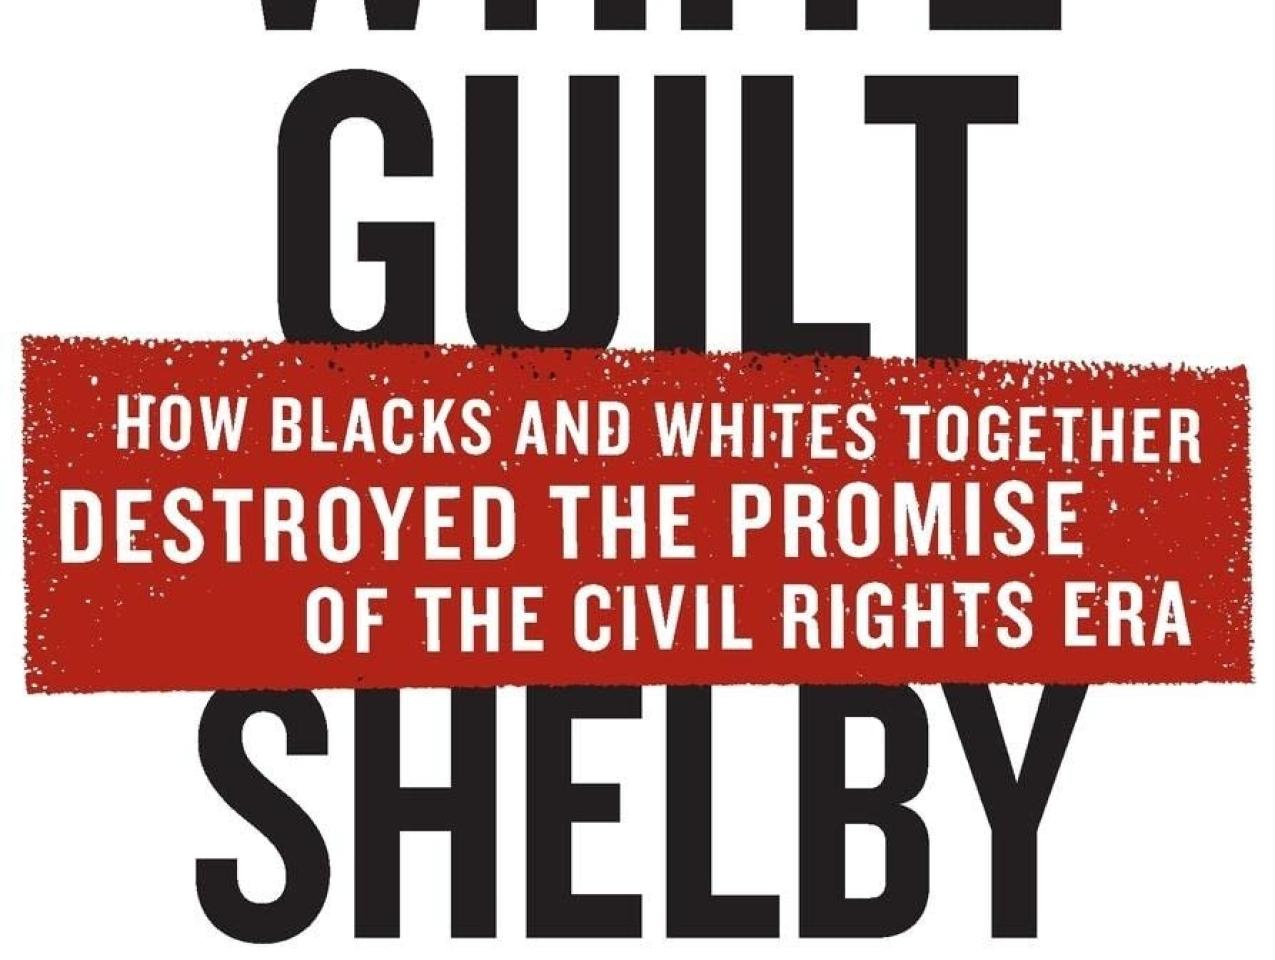 White Guilt - Shelby Steele.jpeg